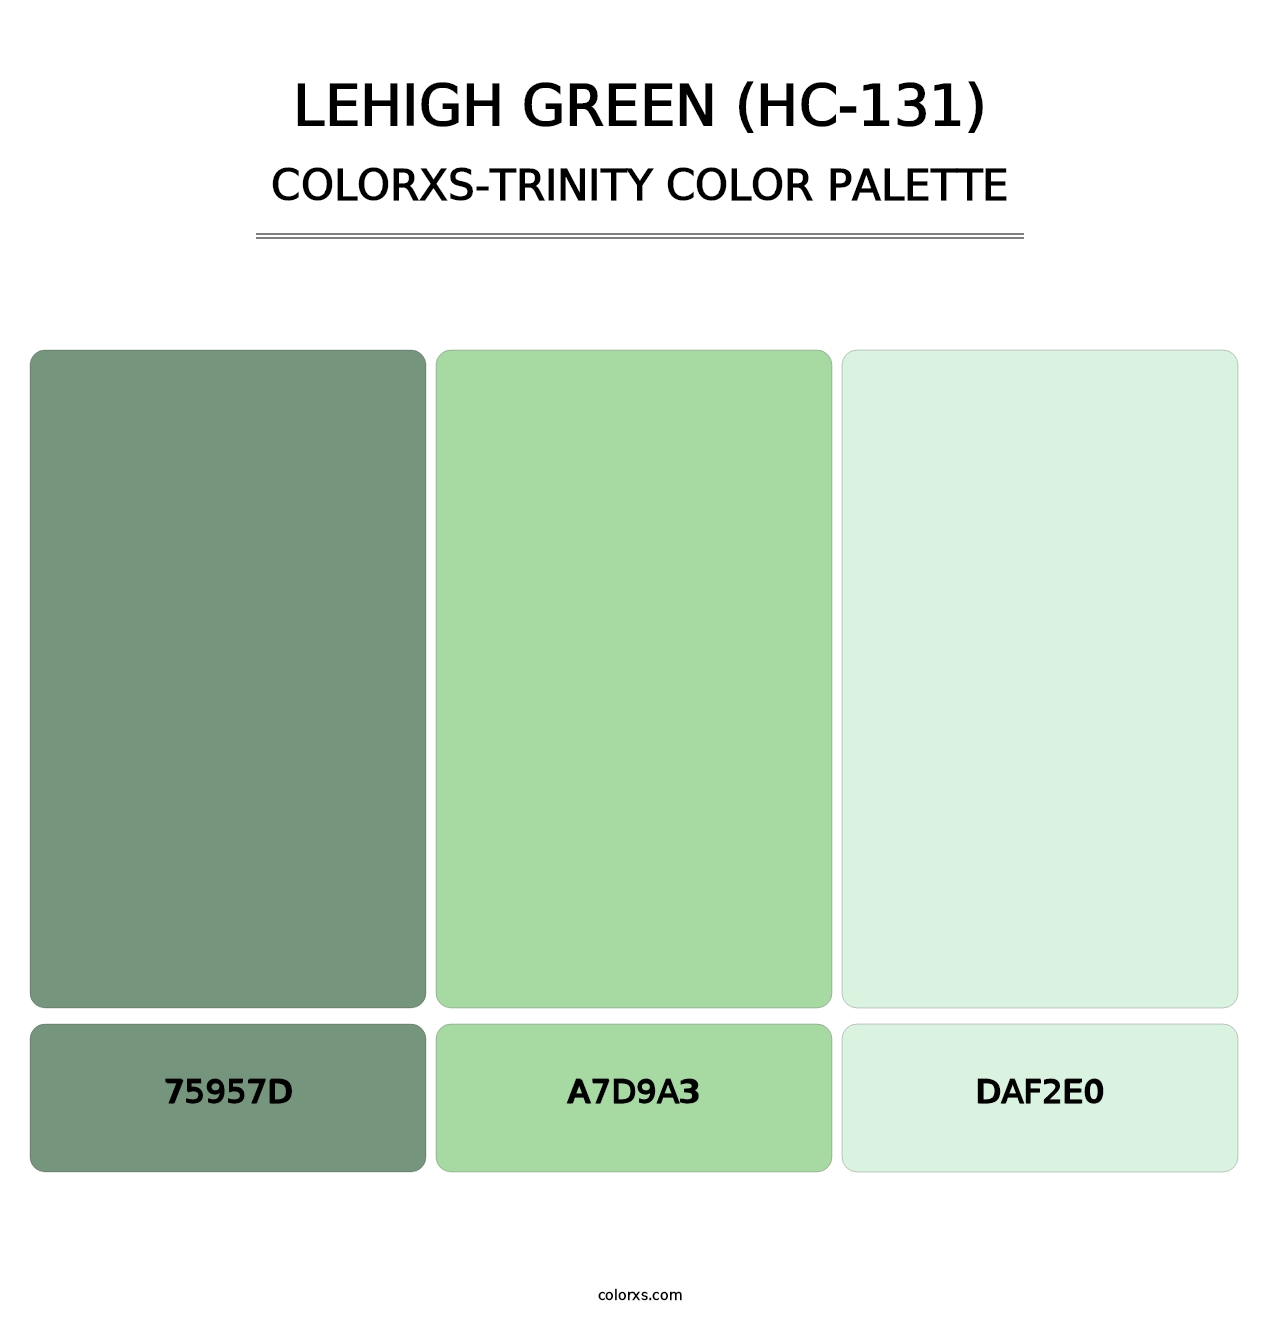 Lehigh Green (HC-131) - Colorxs Trinity Palette